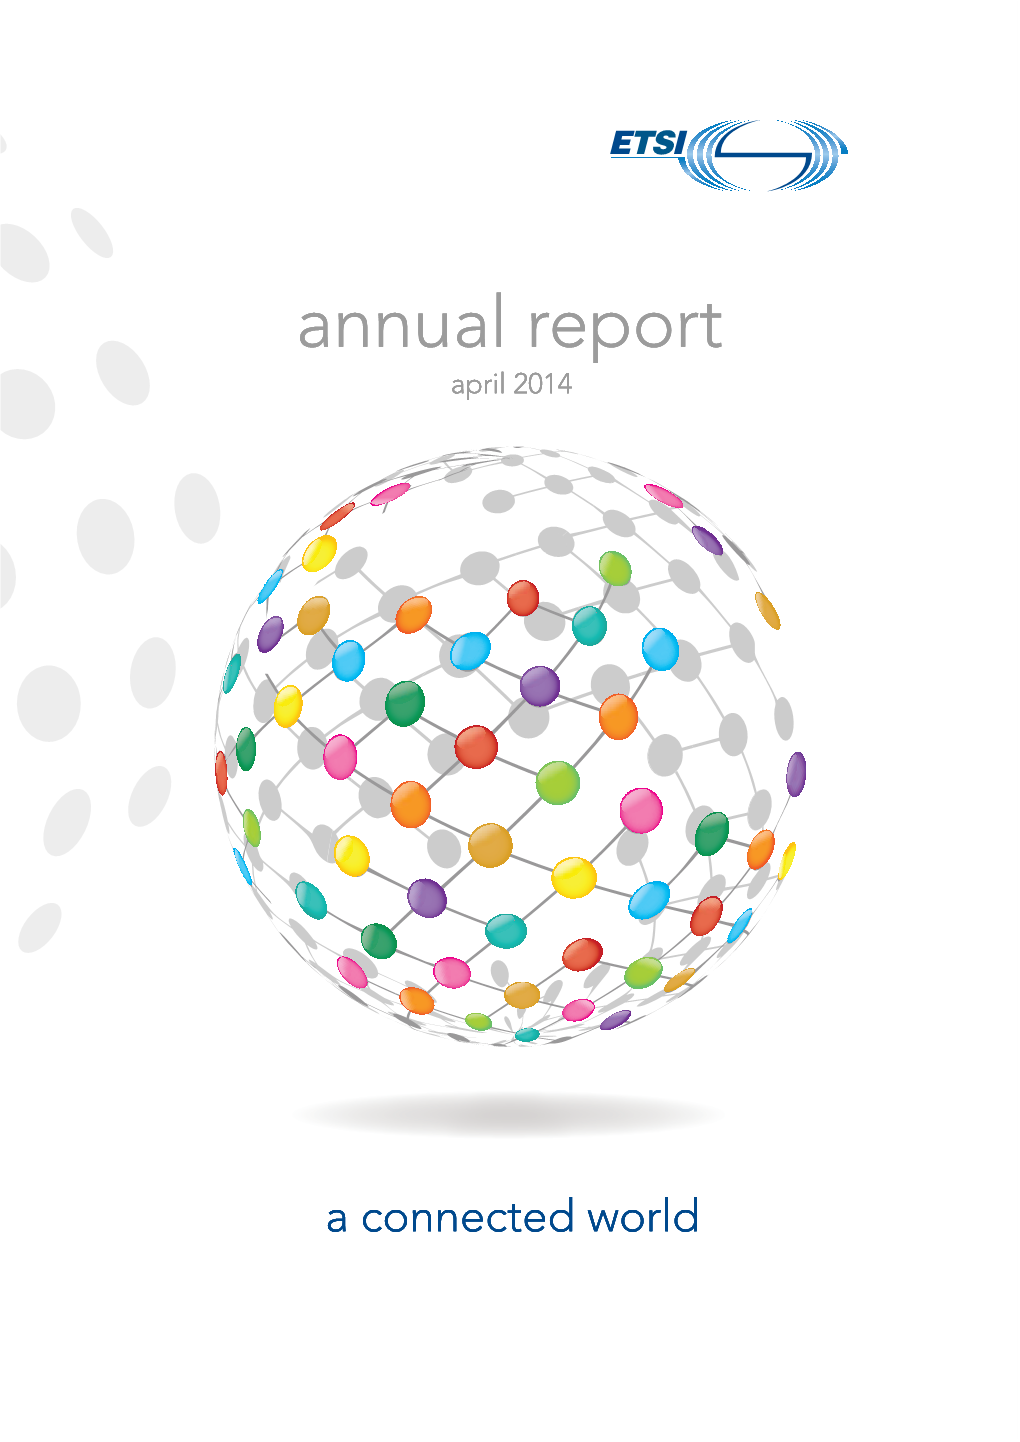 ETSI Annual Report 2013